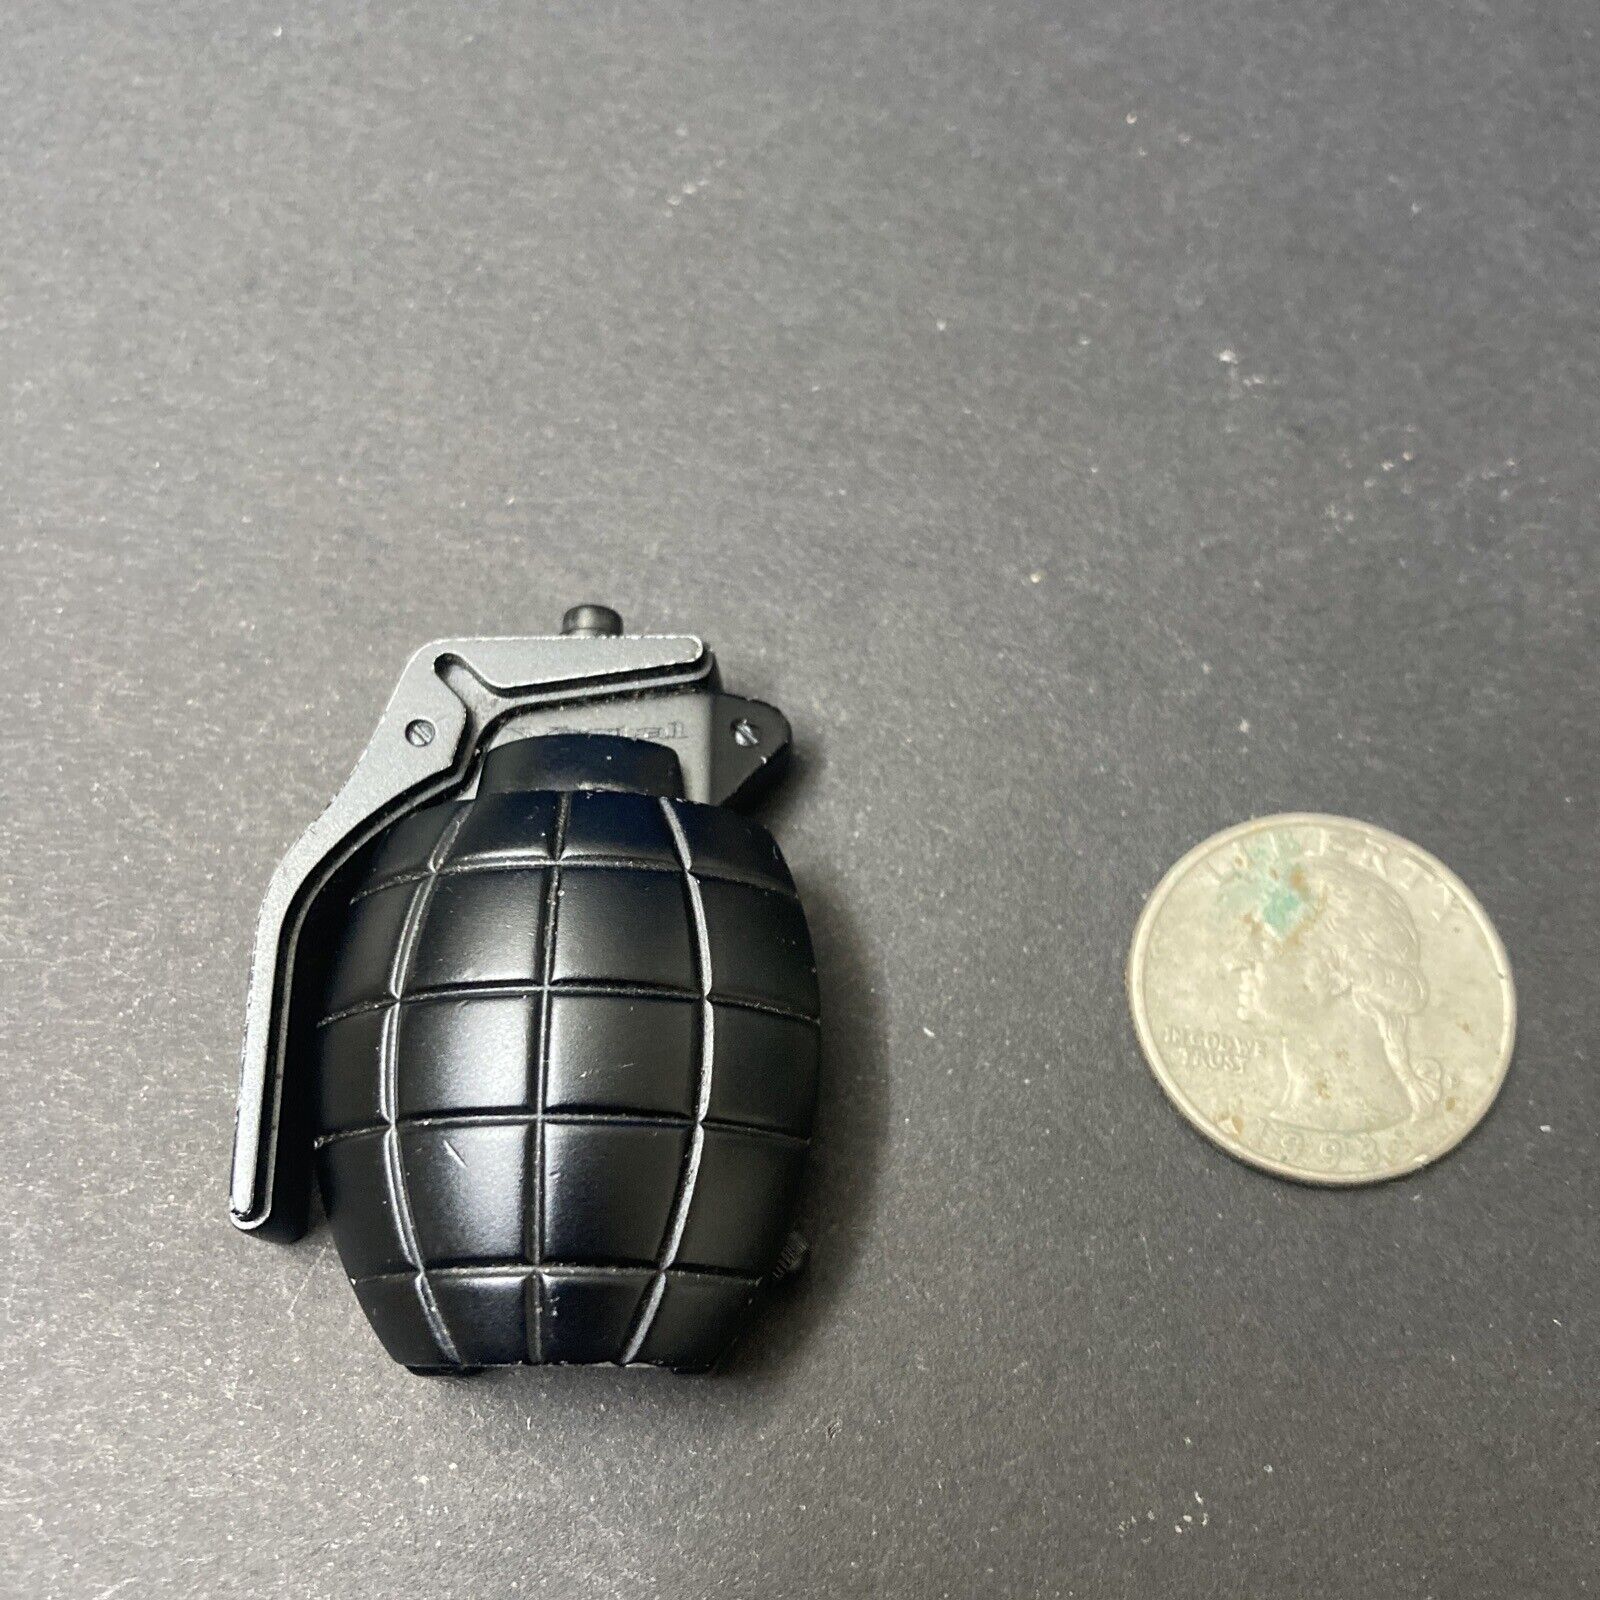 RARE Vestal Grenade Shaped Small Black Watch. Unisex. Japan Mov\'t. UNIQUE LOOK